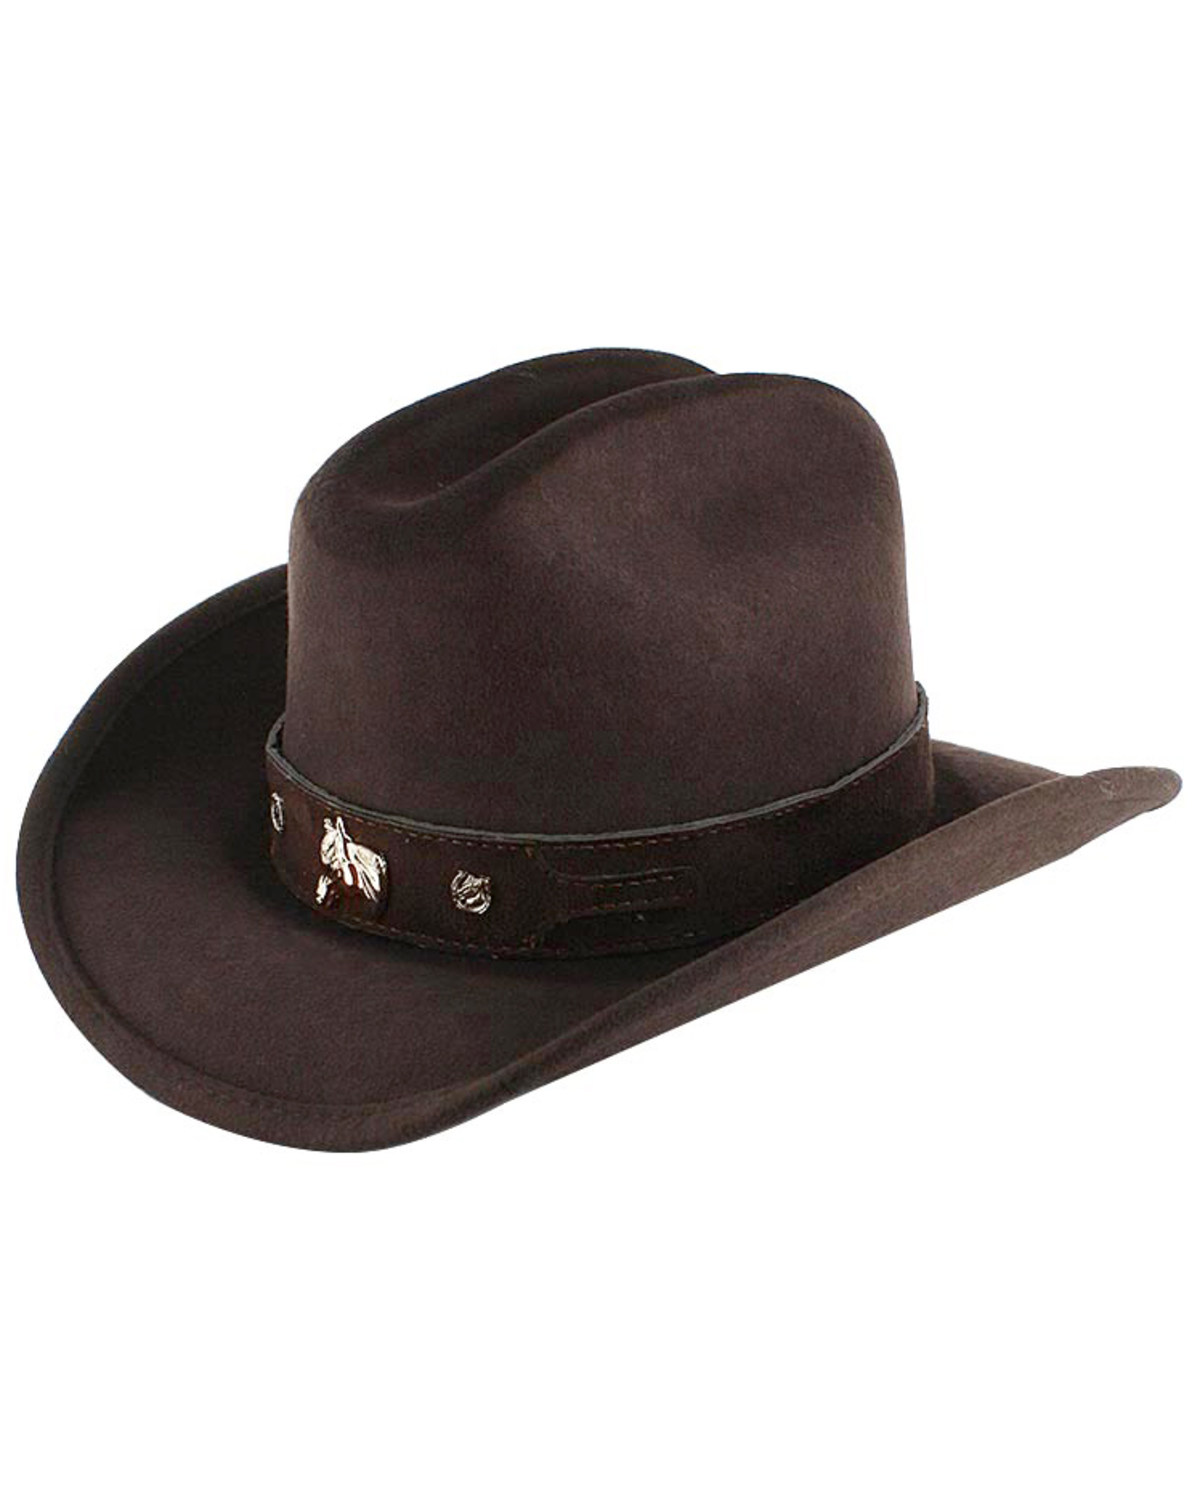 Cody James Kids' Monte Carlo Horsing Around Felt Cowboy Hat